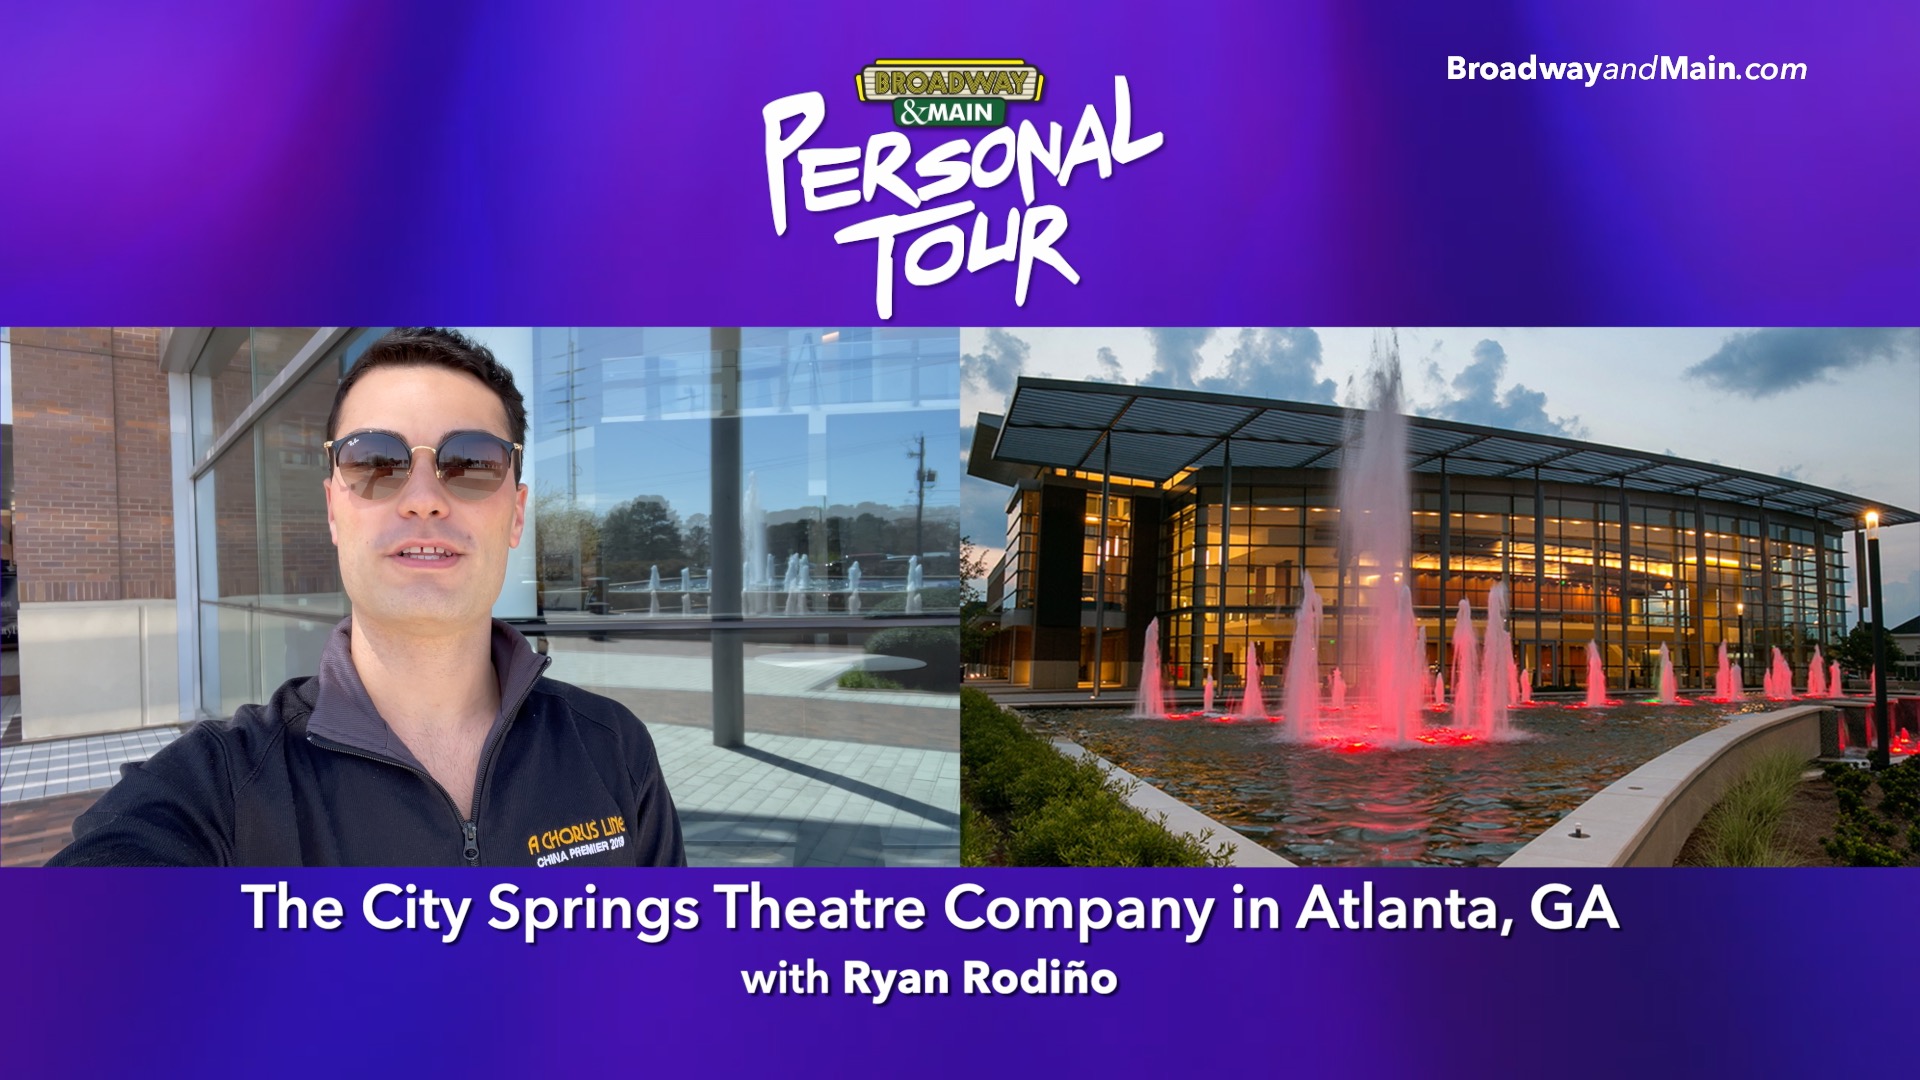 Personal Tour of The City Springs Theatre Company in Atlanta, GA